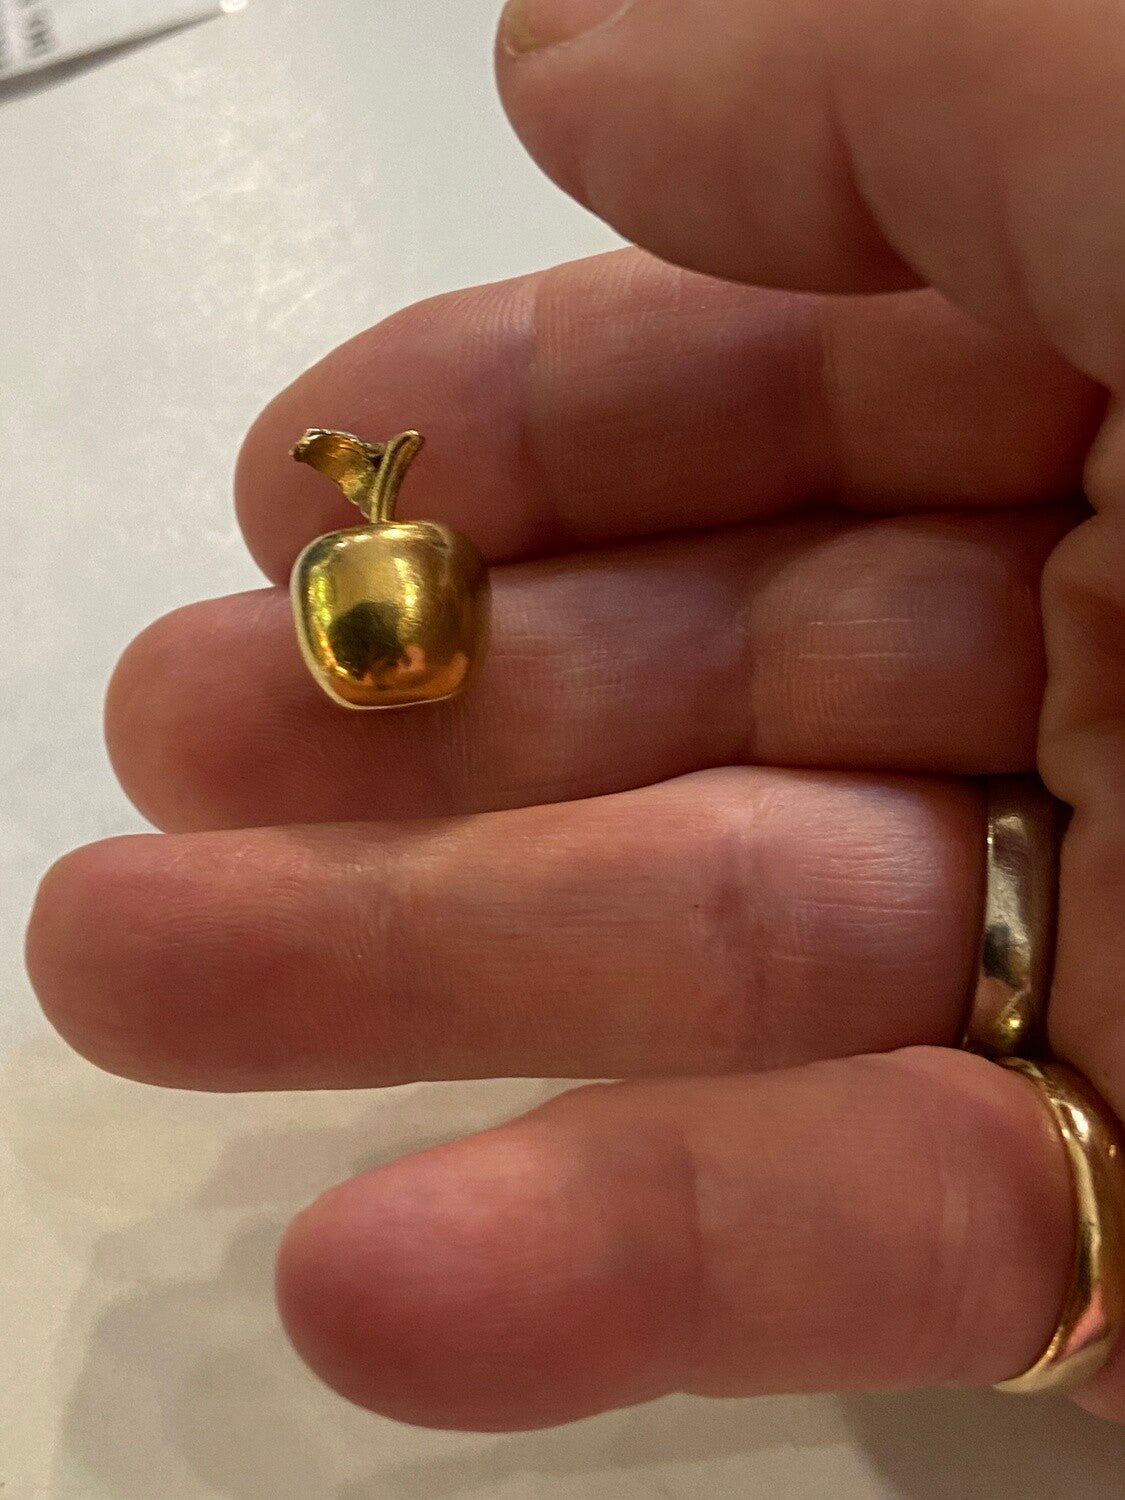 9ct vintage gold hollow apple charm / pendant